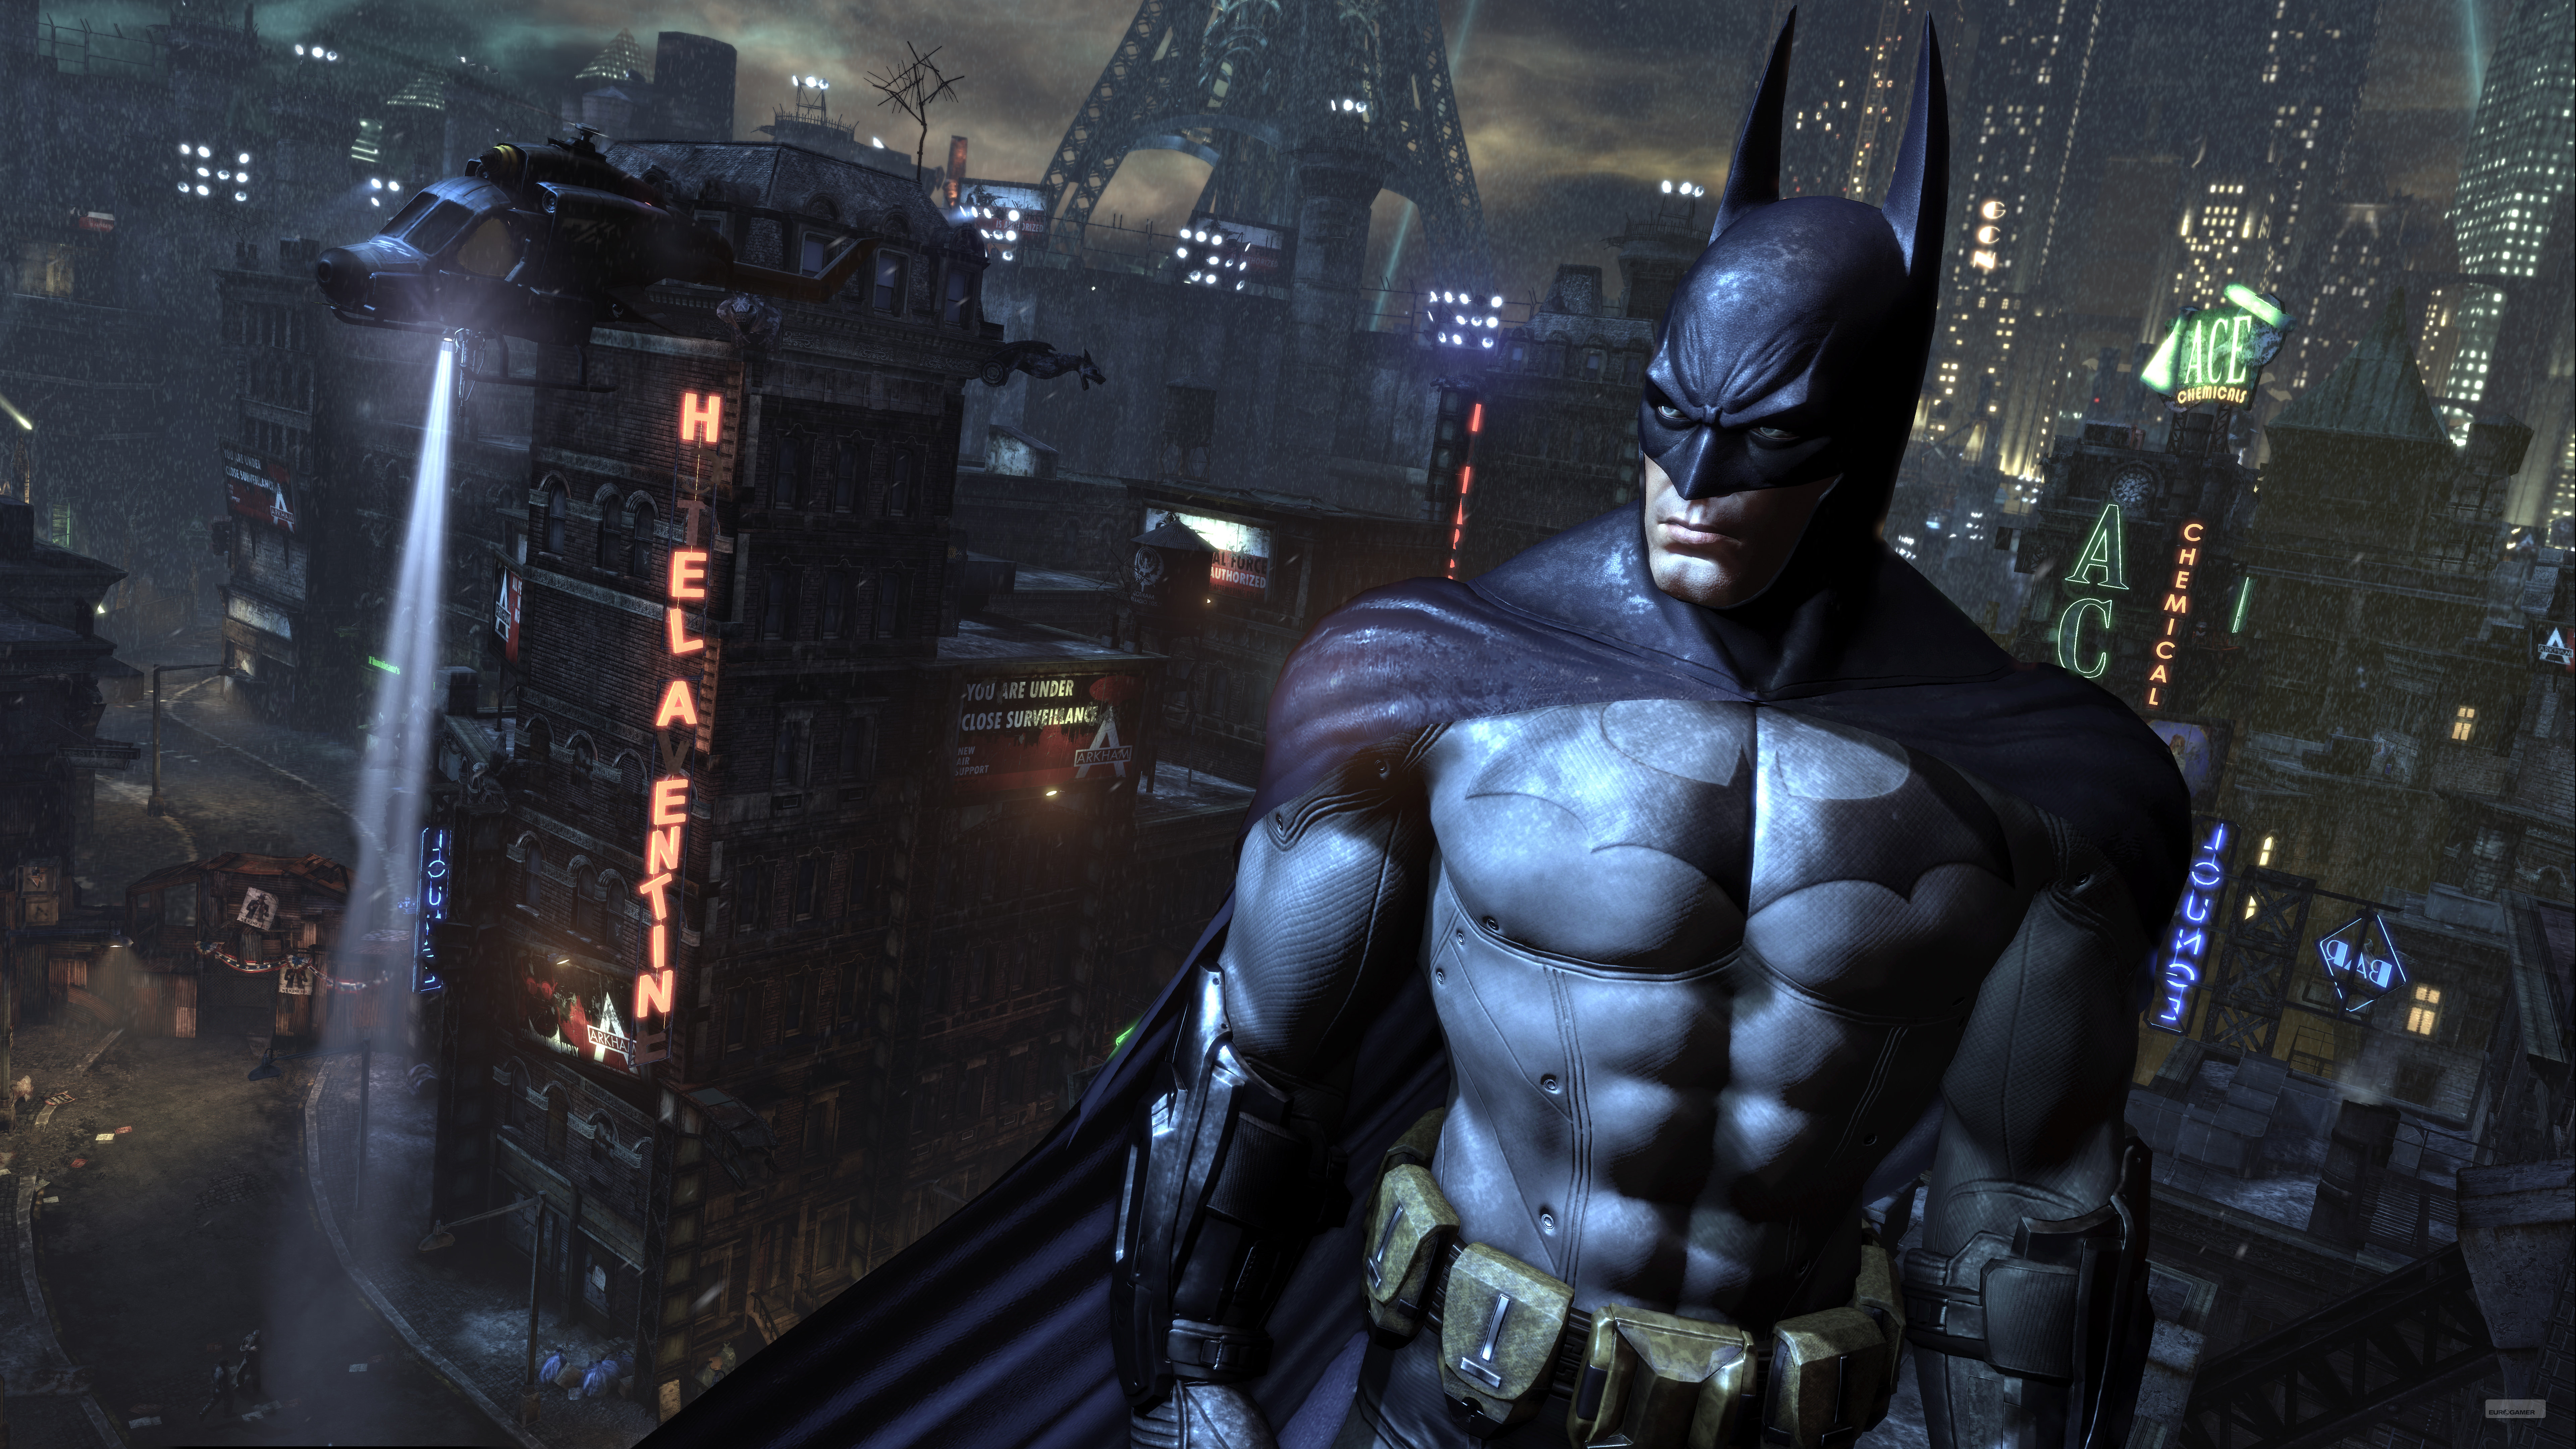 Fondos de Pantalla Batman Arkham City, Batman Arkham Asylum, Batman Arkham  Origins, Batman, Superhéroe, Imágenes y Fotos Gratis